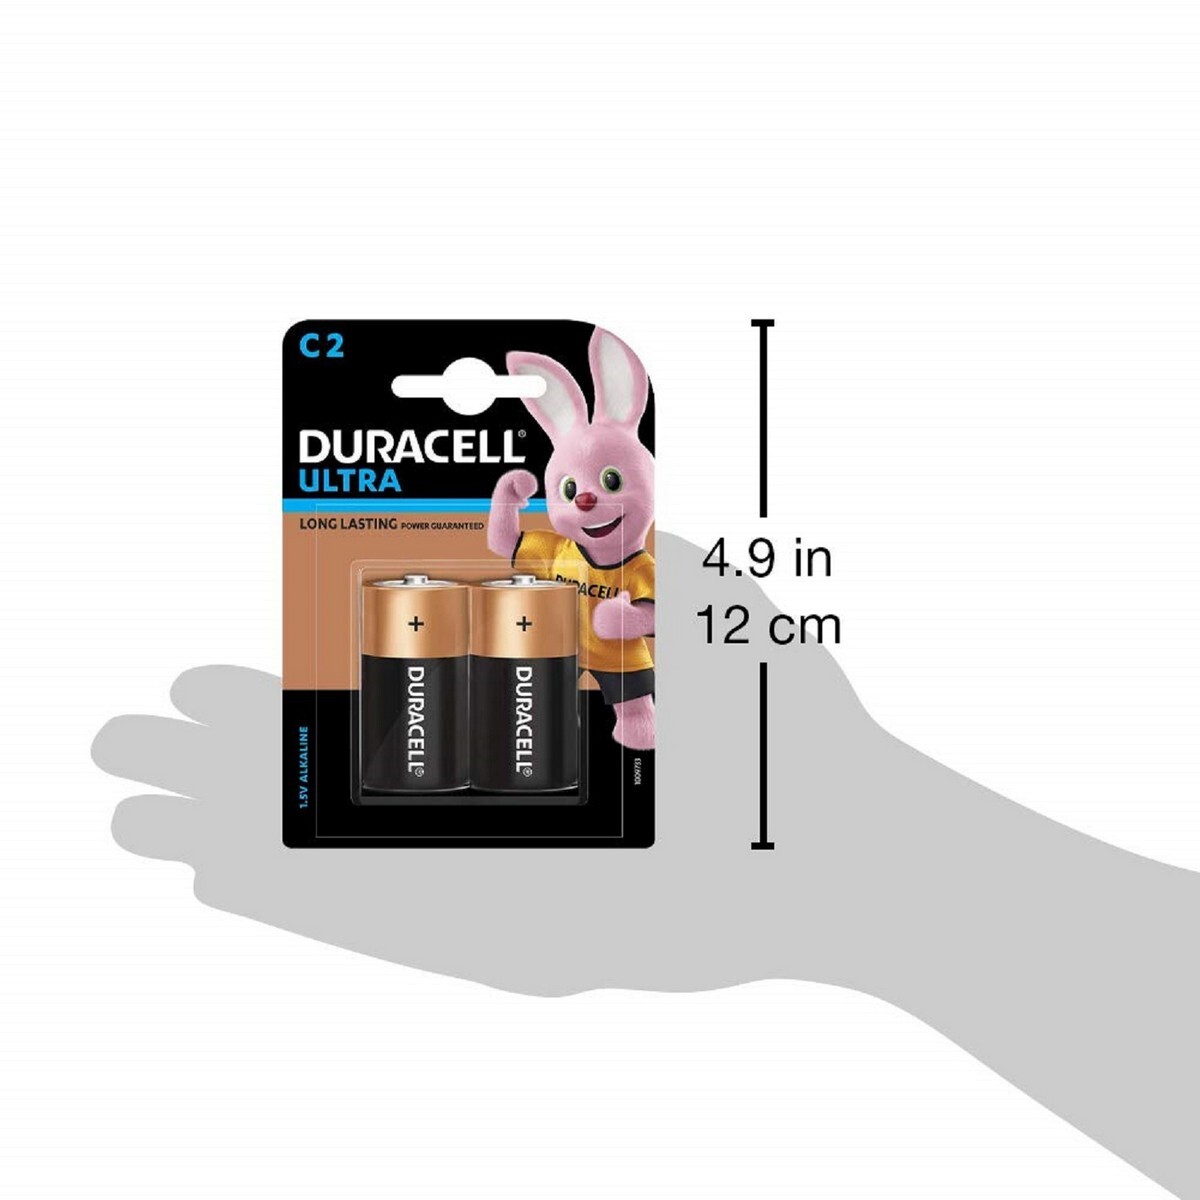 Duracell- Alkaline 2N C Batteries